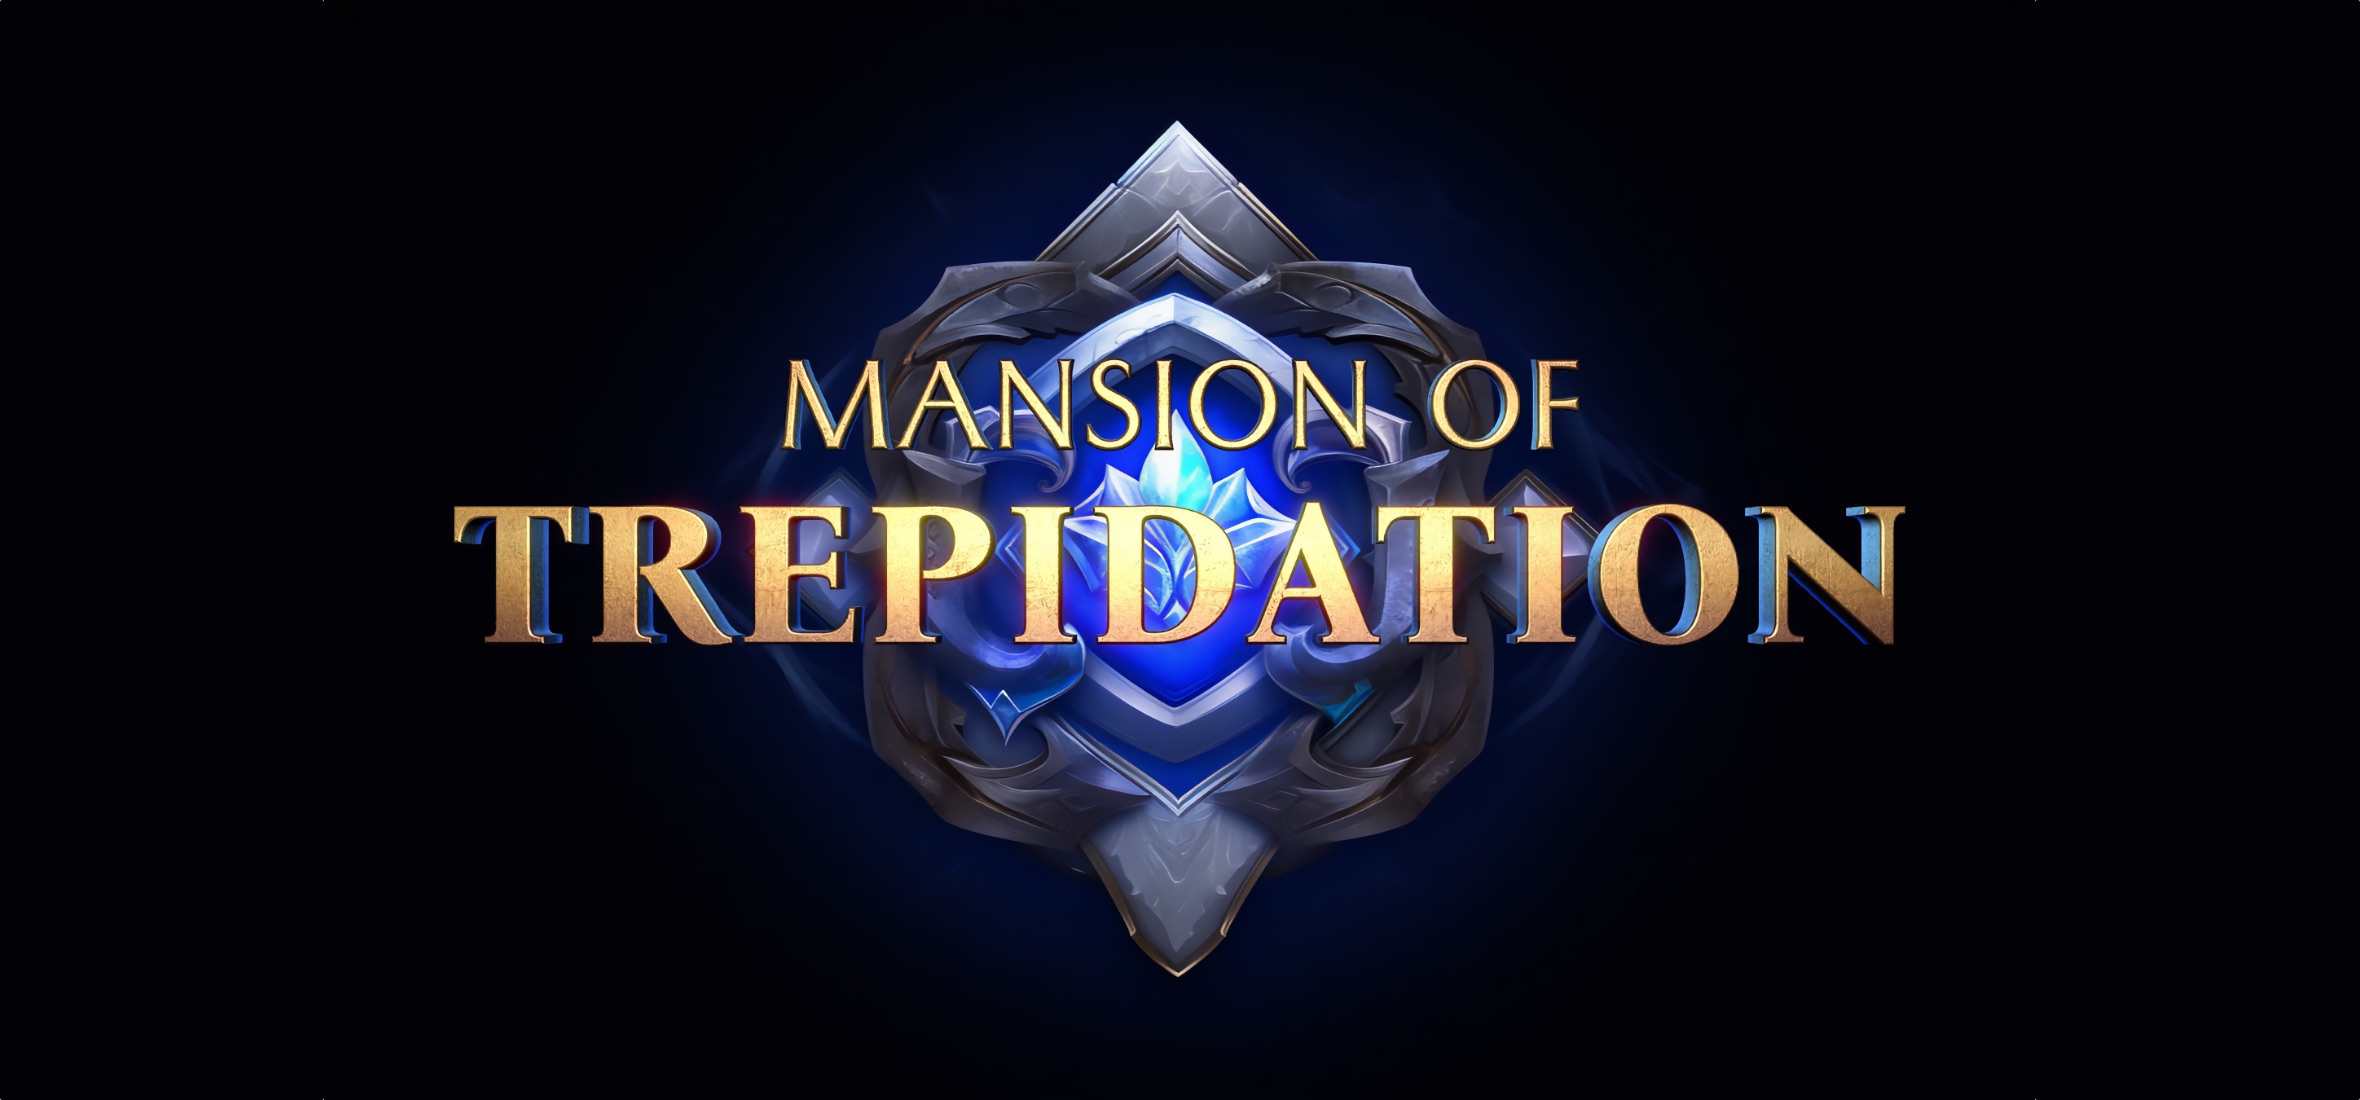 The Mansion of Trepidation